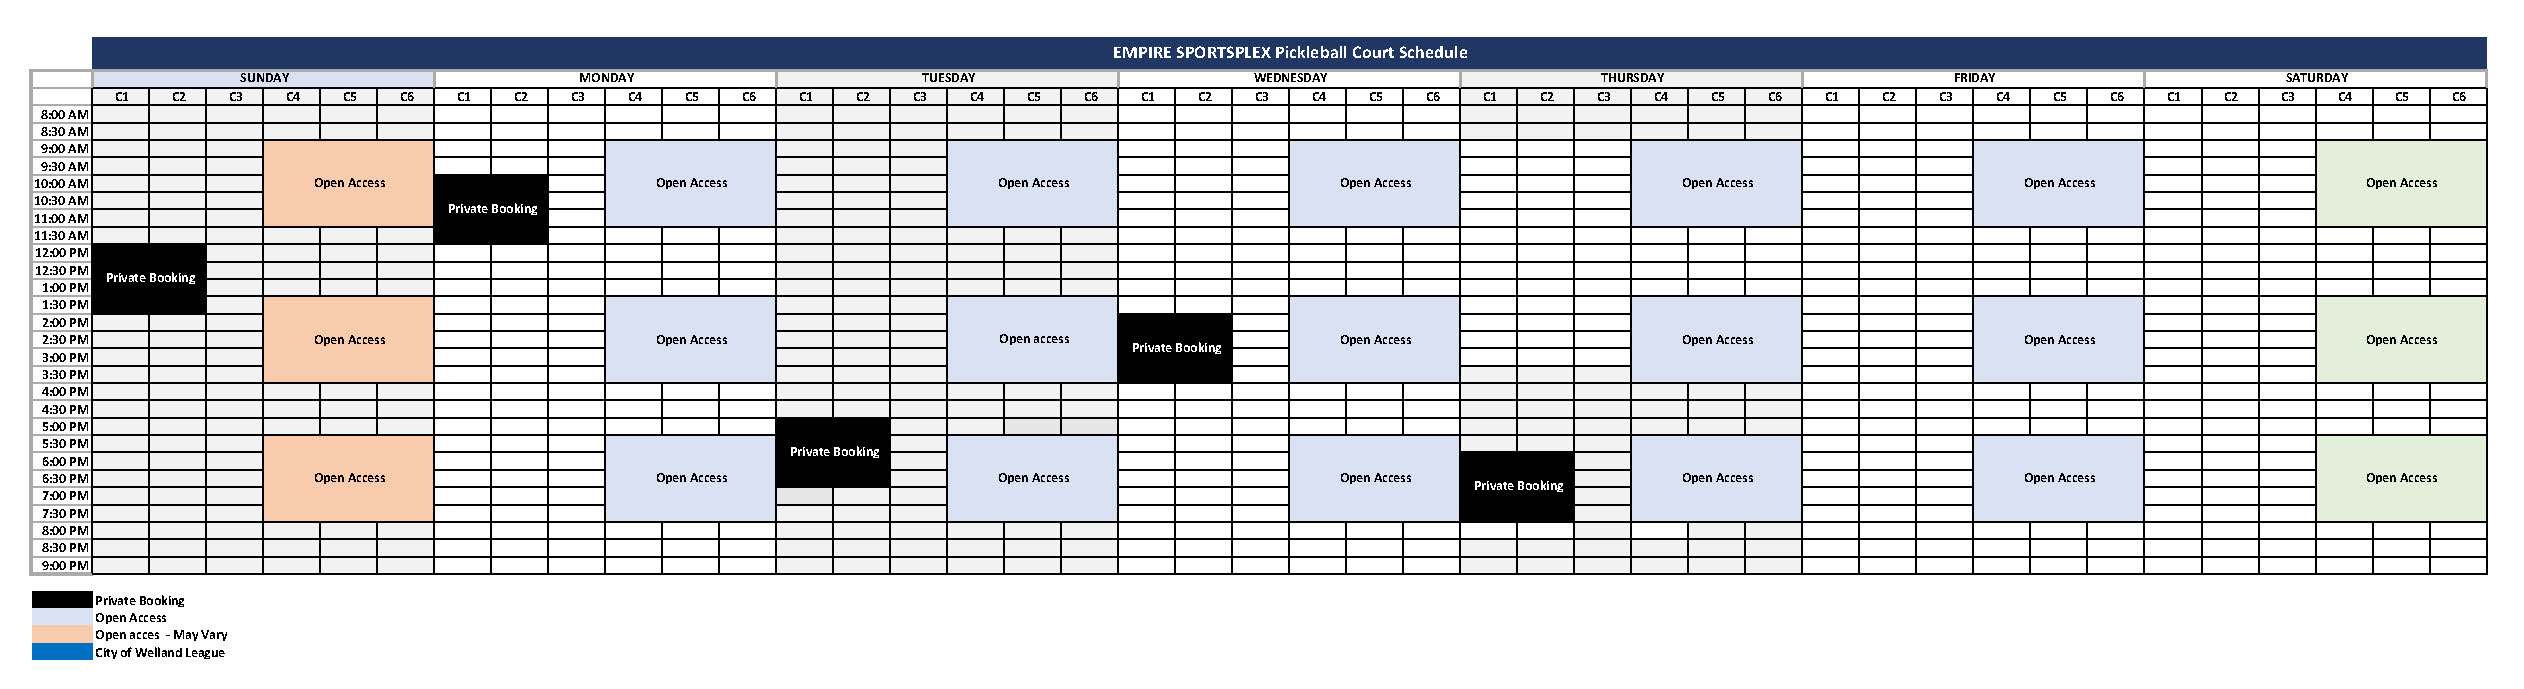 pickleball schedule